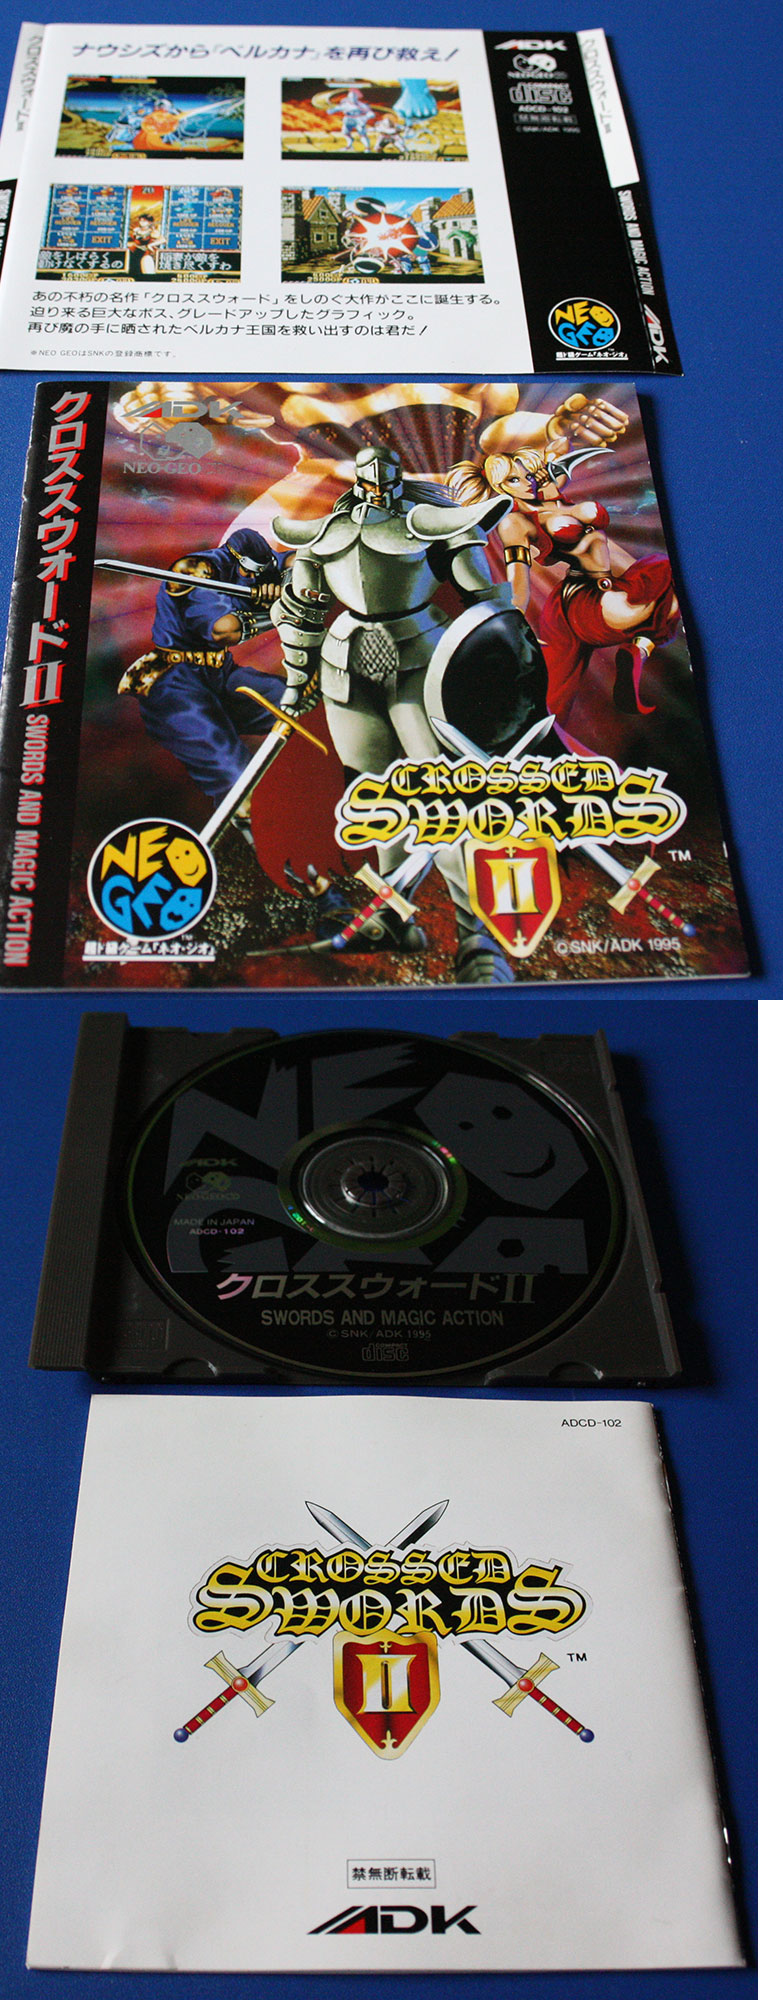 Crossed Swords II from ADK - Neo-Geo CD